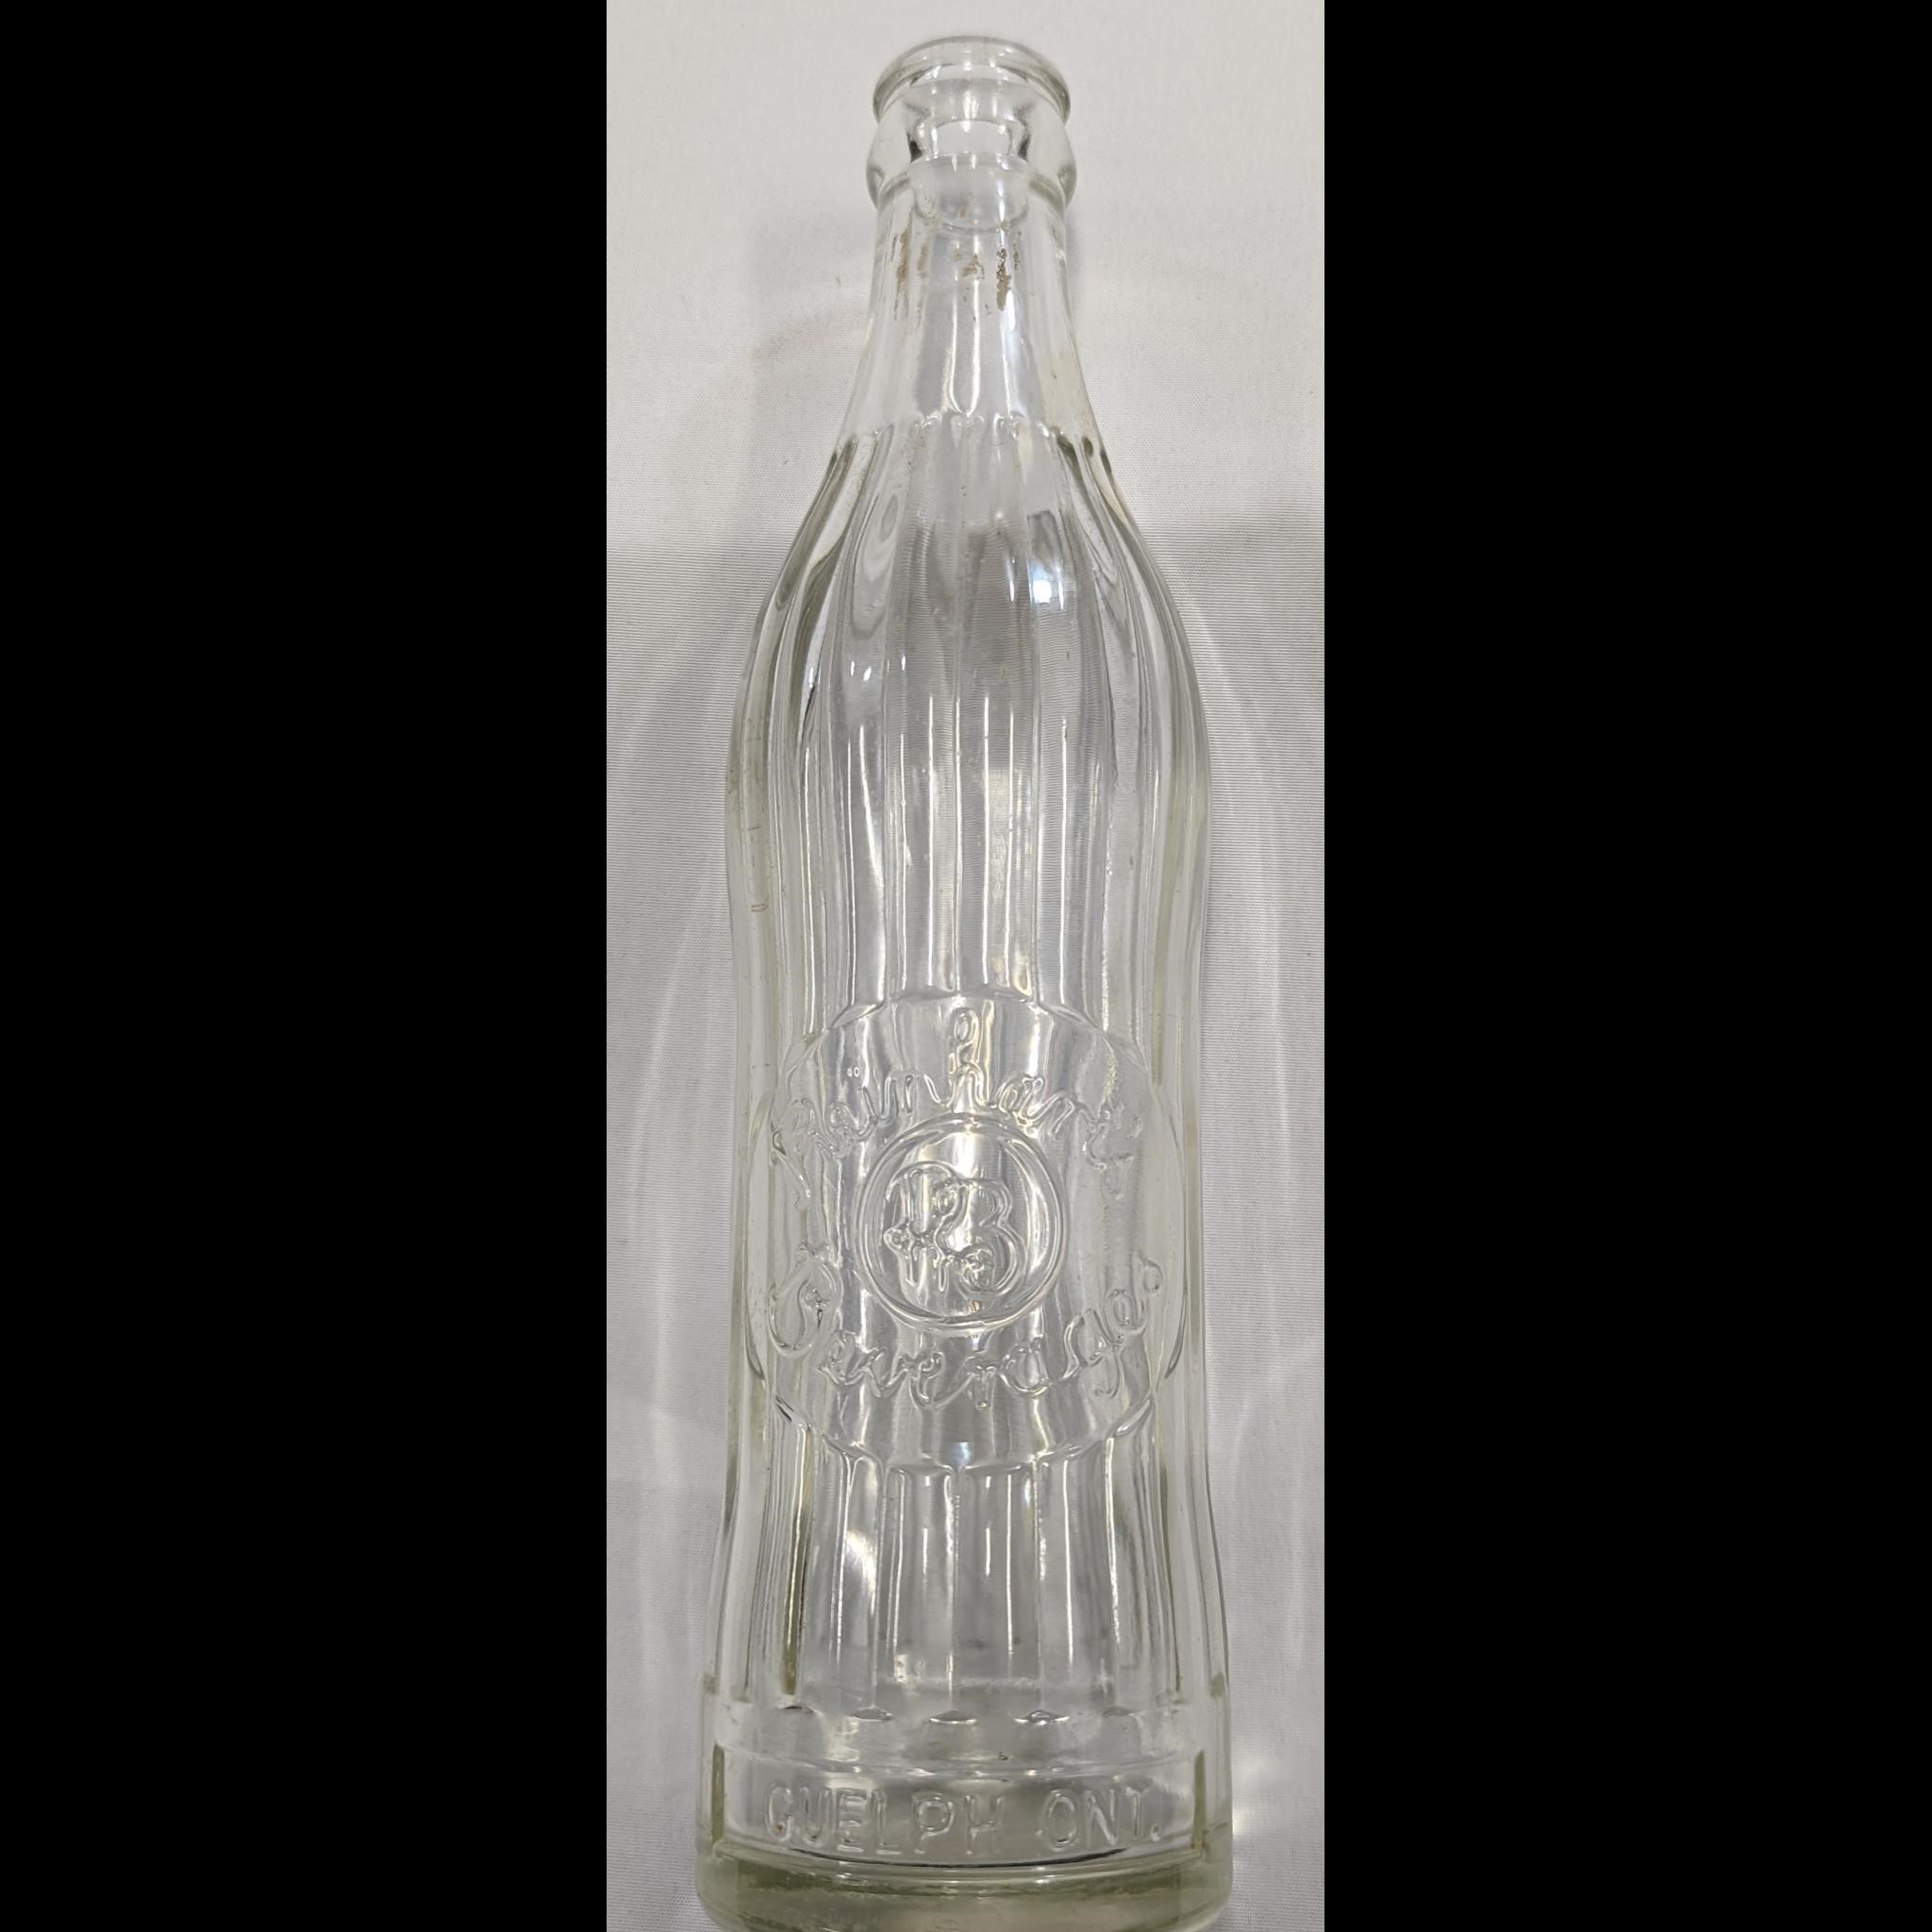 Vintage Reinhart Beverage Bottle